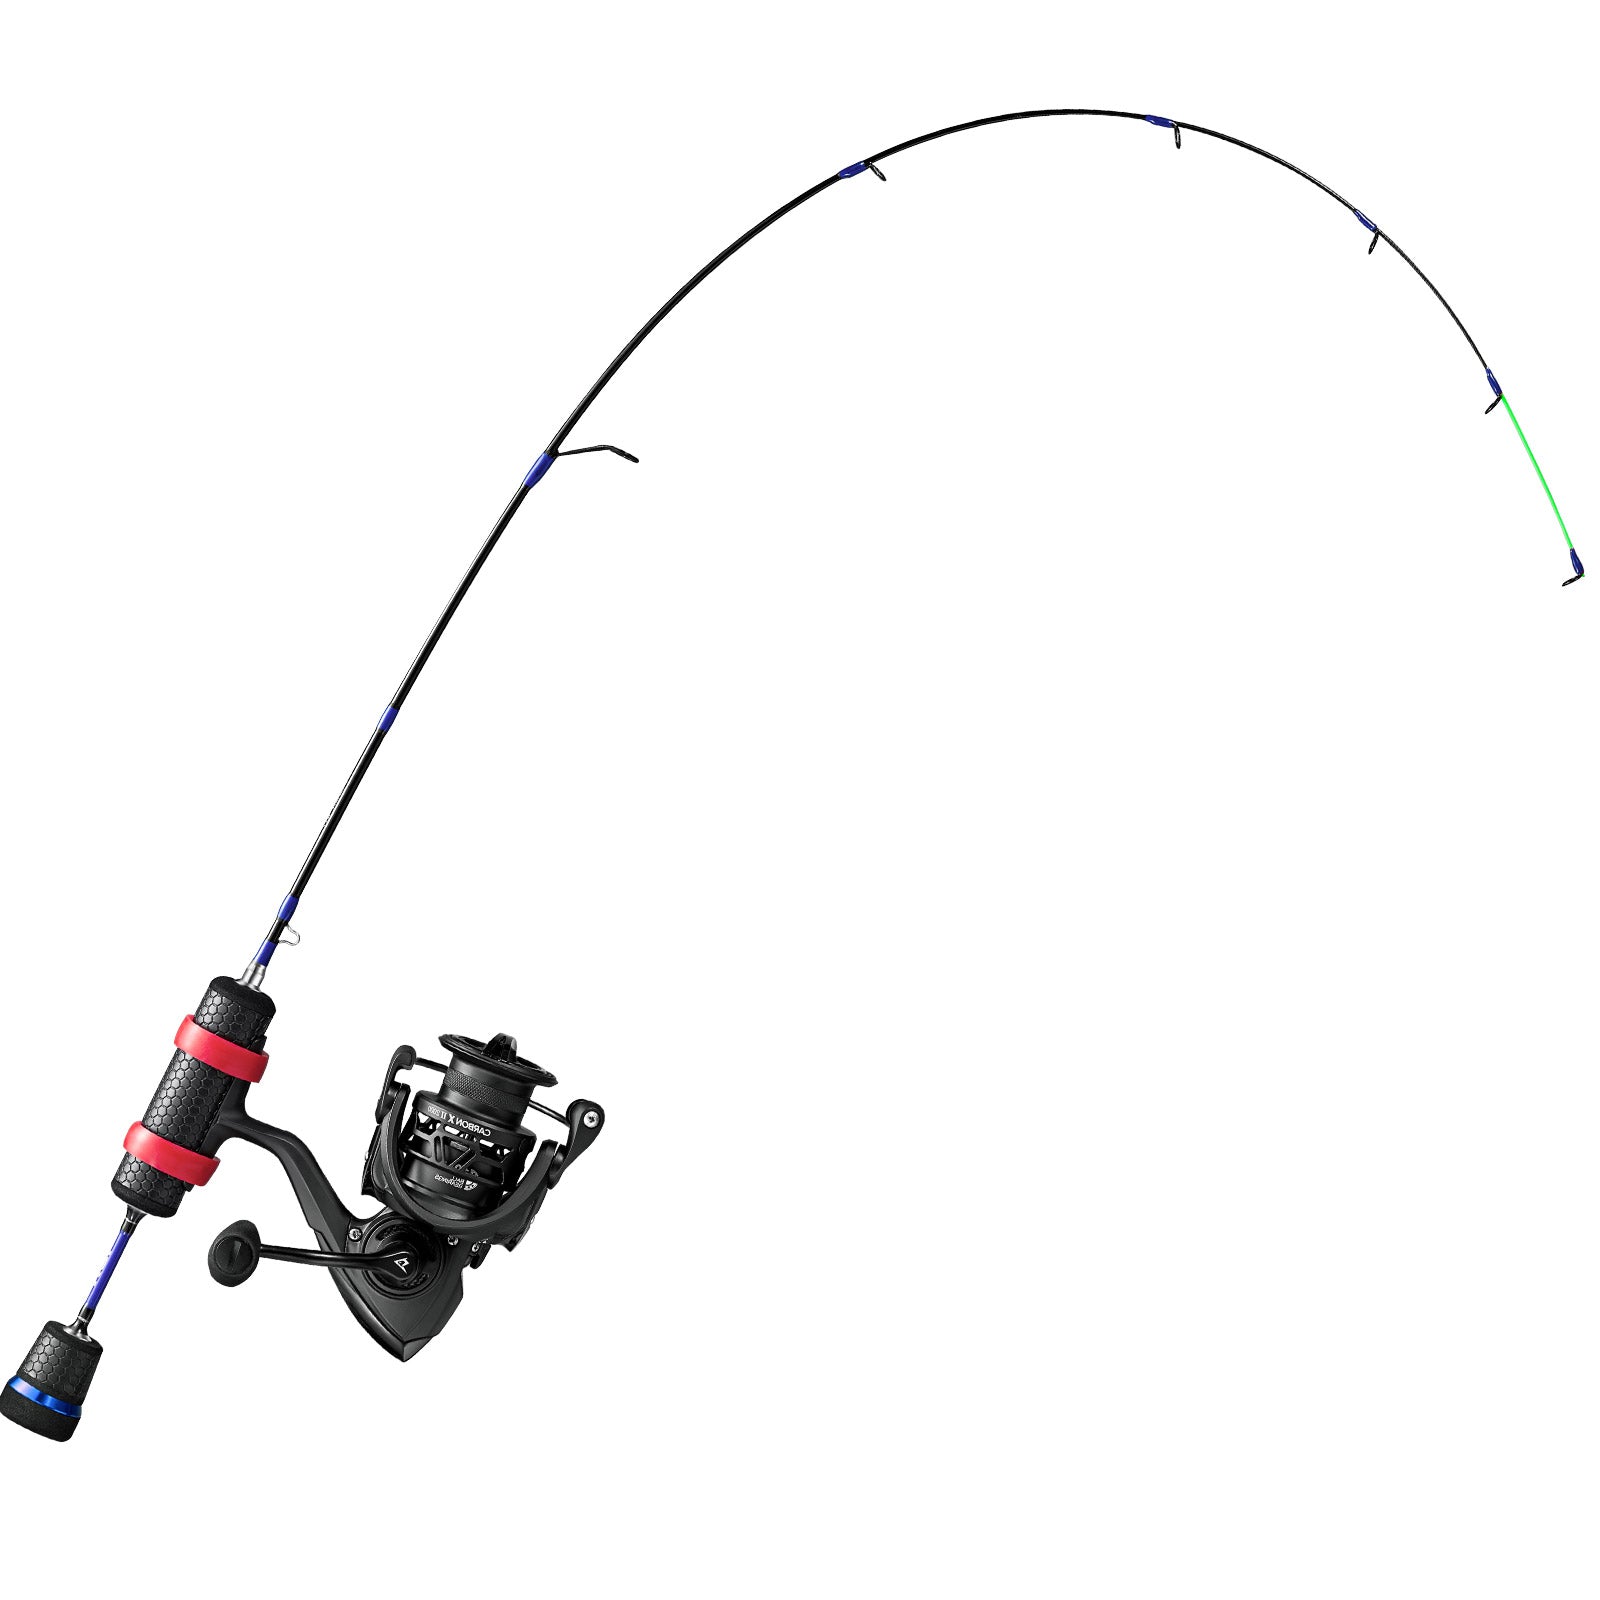 Piscifun Carbon X 500 Ultralight Review. : r/Fishing